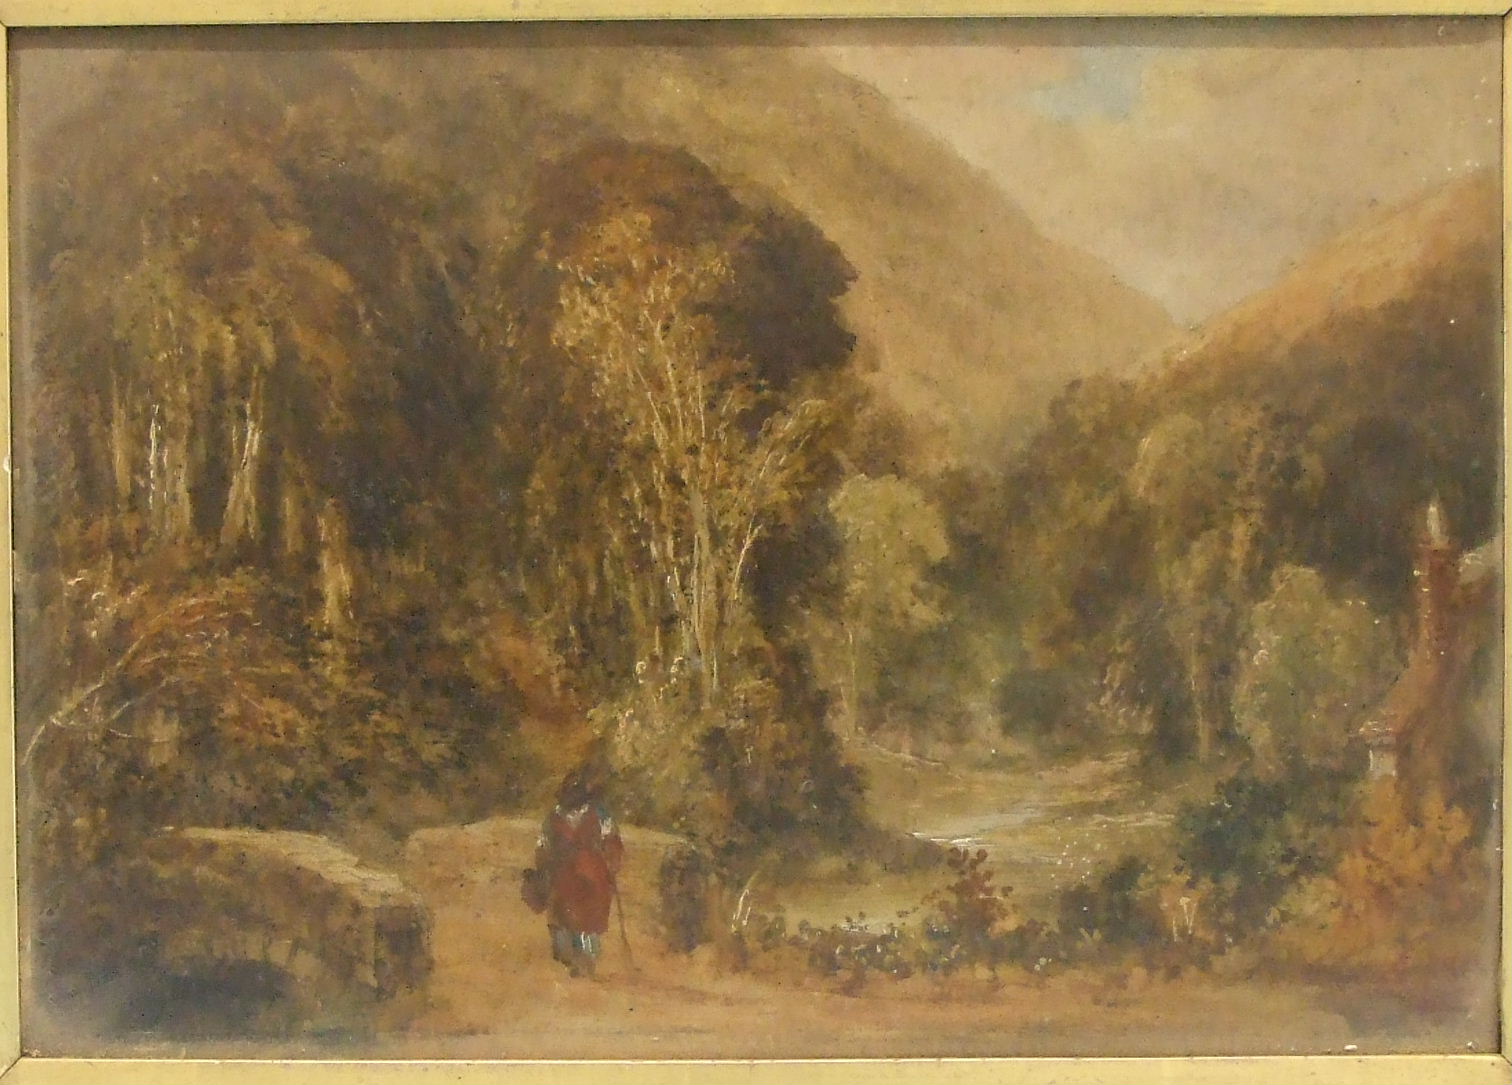 19th century Continental School, 'Figure crossing a bridge in a mountainous landscape', unsigned oil